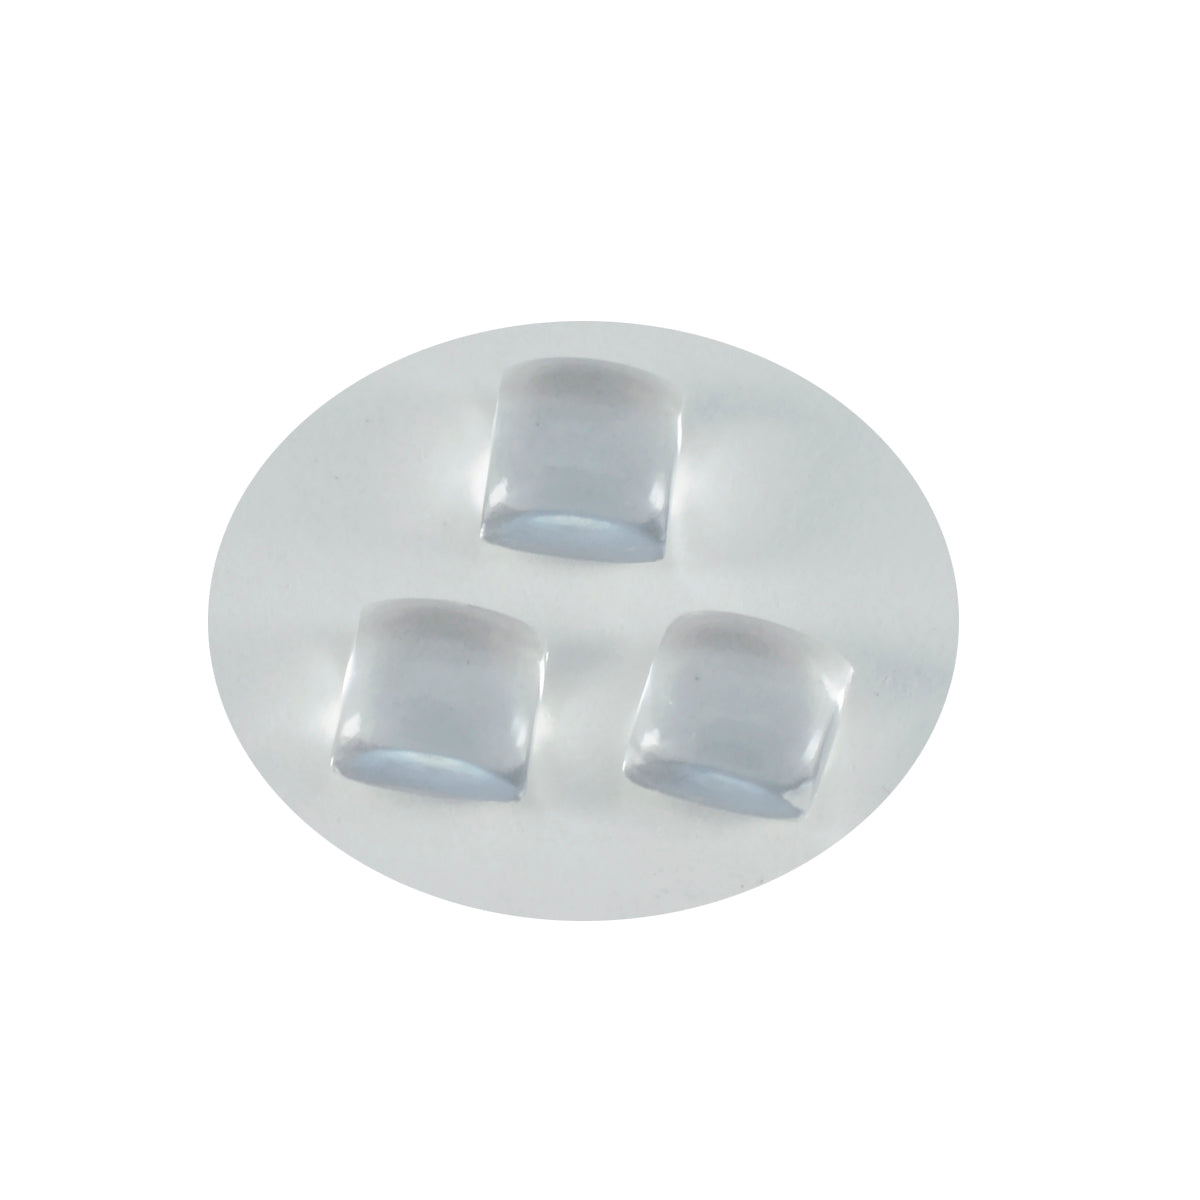 riyogems 1pc ホワイト クリスタル クォーツ カボション 8x8 mm 正方形の形状の驚くべき品質のルース宝石